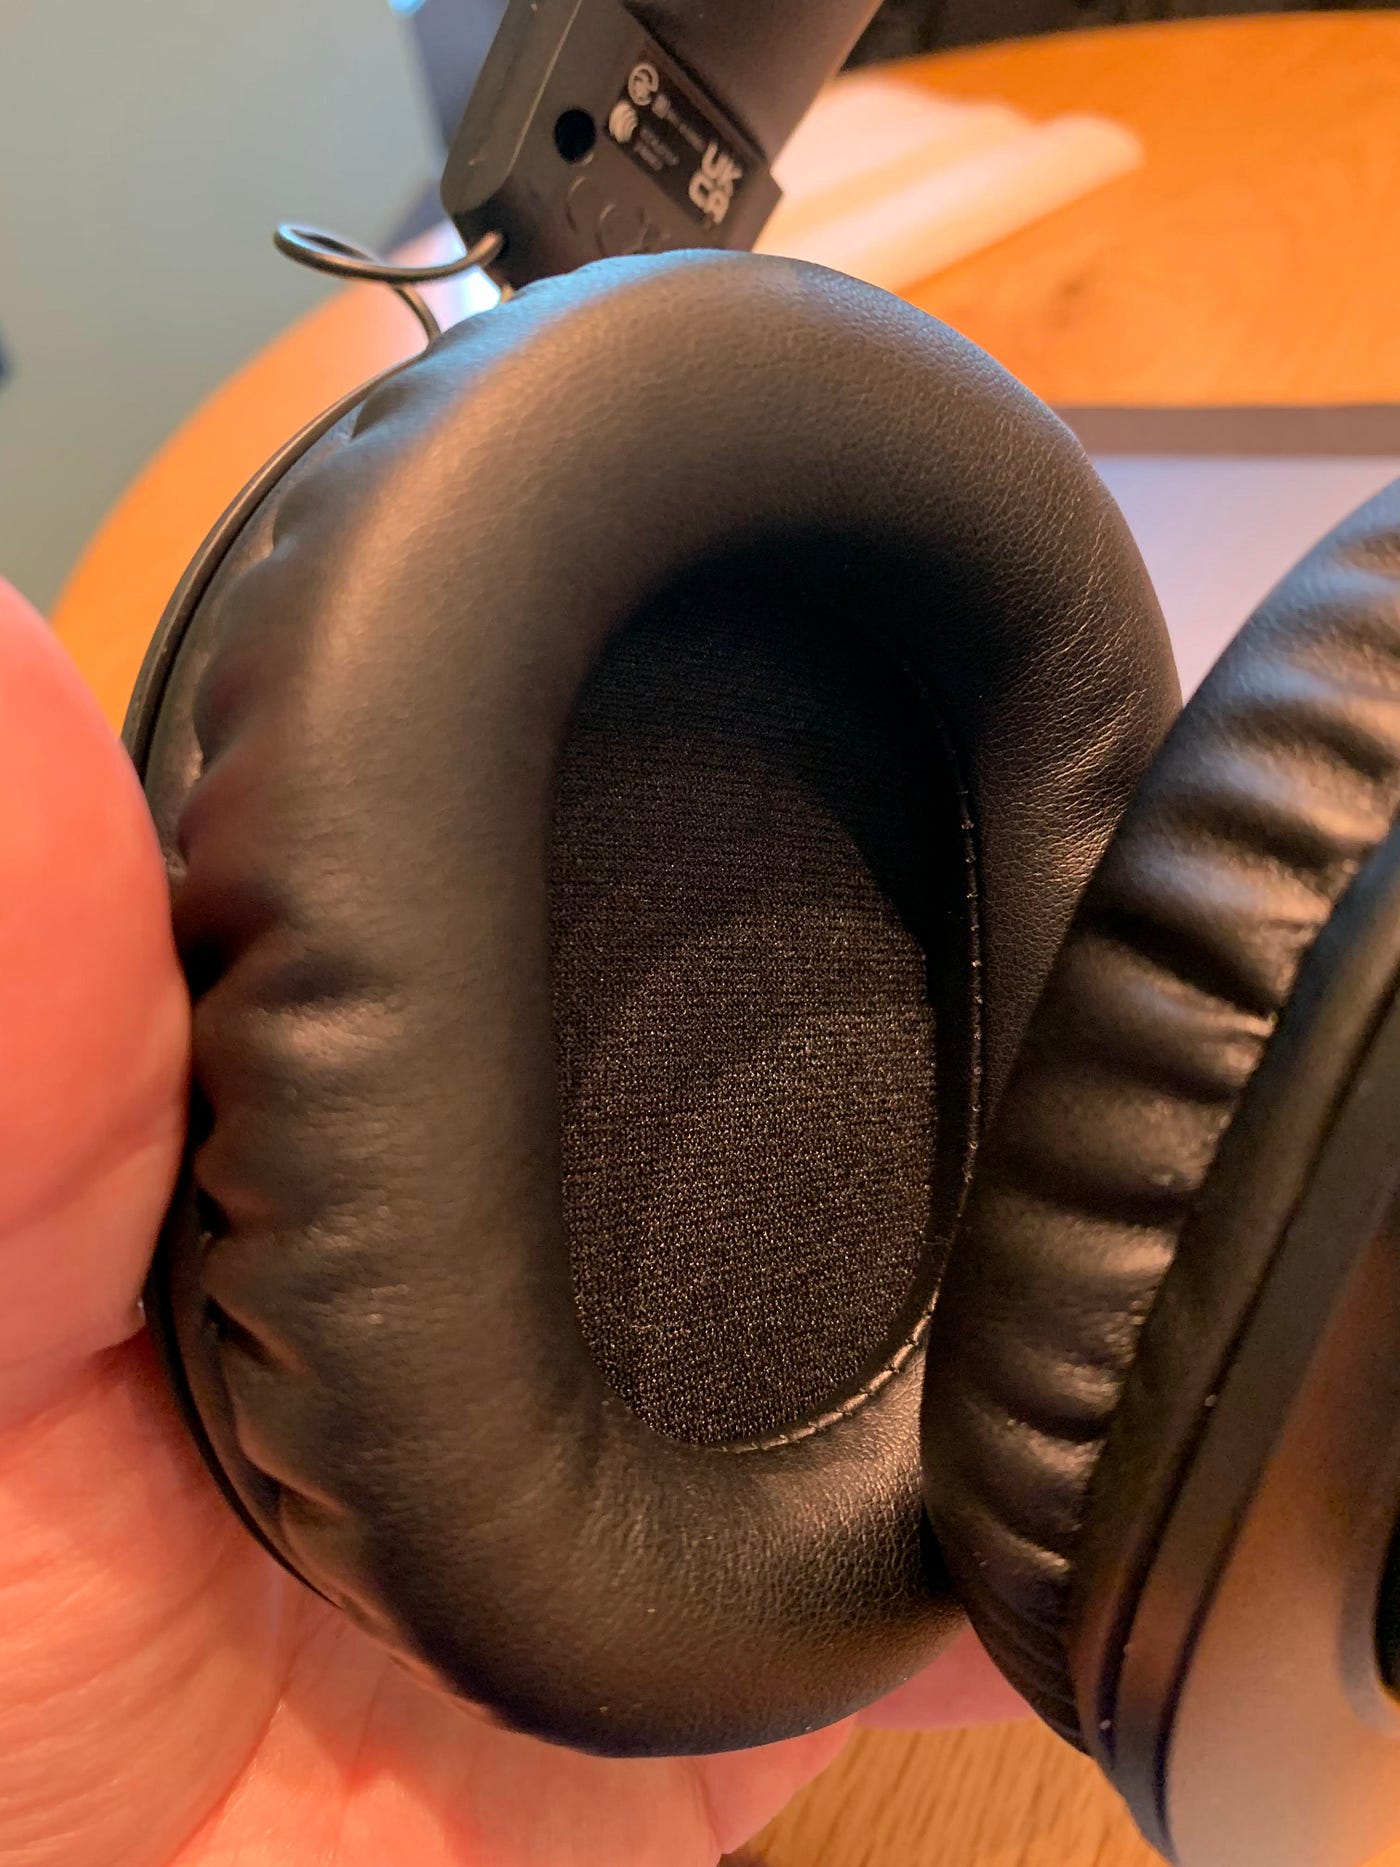 Audio-Technica M50X Headphones Review, by Alex Rowe